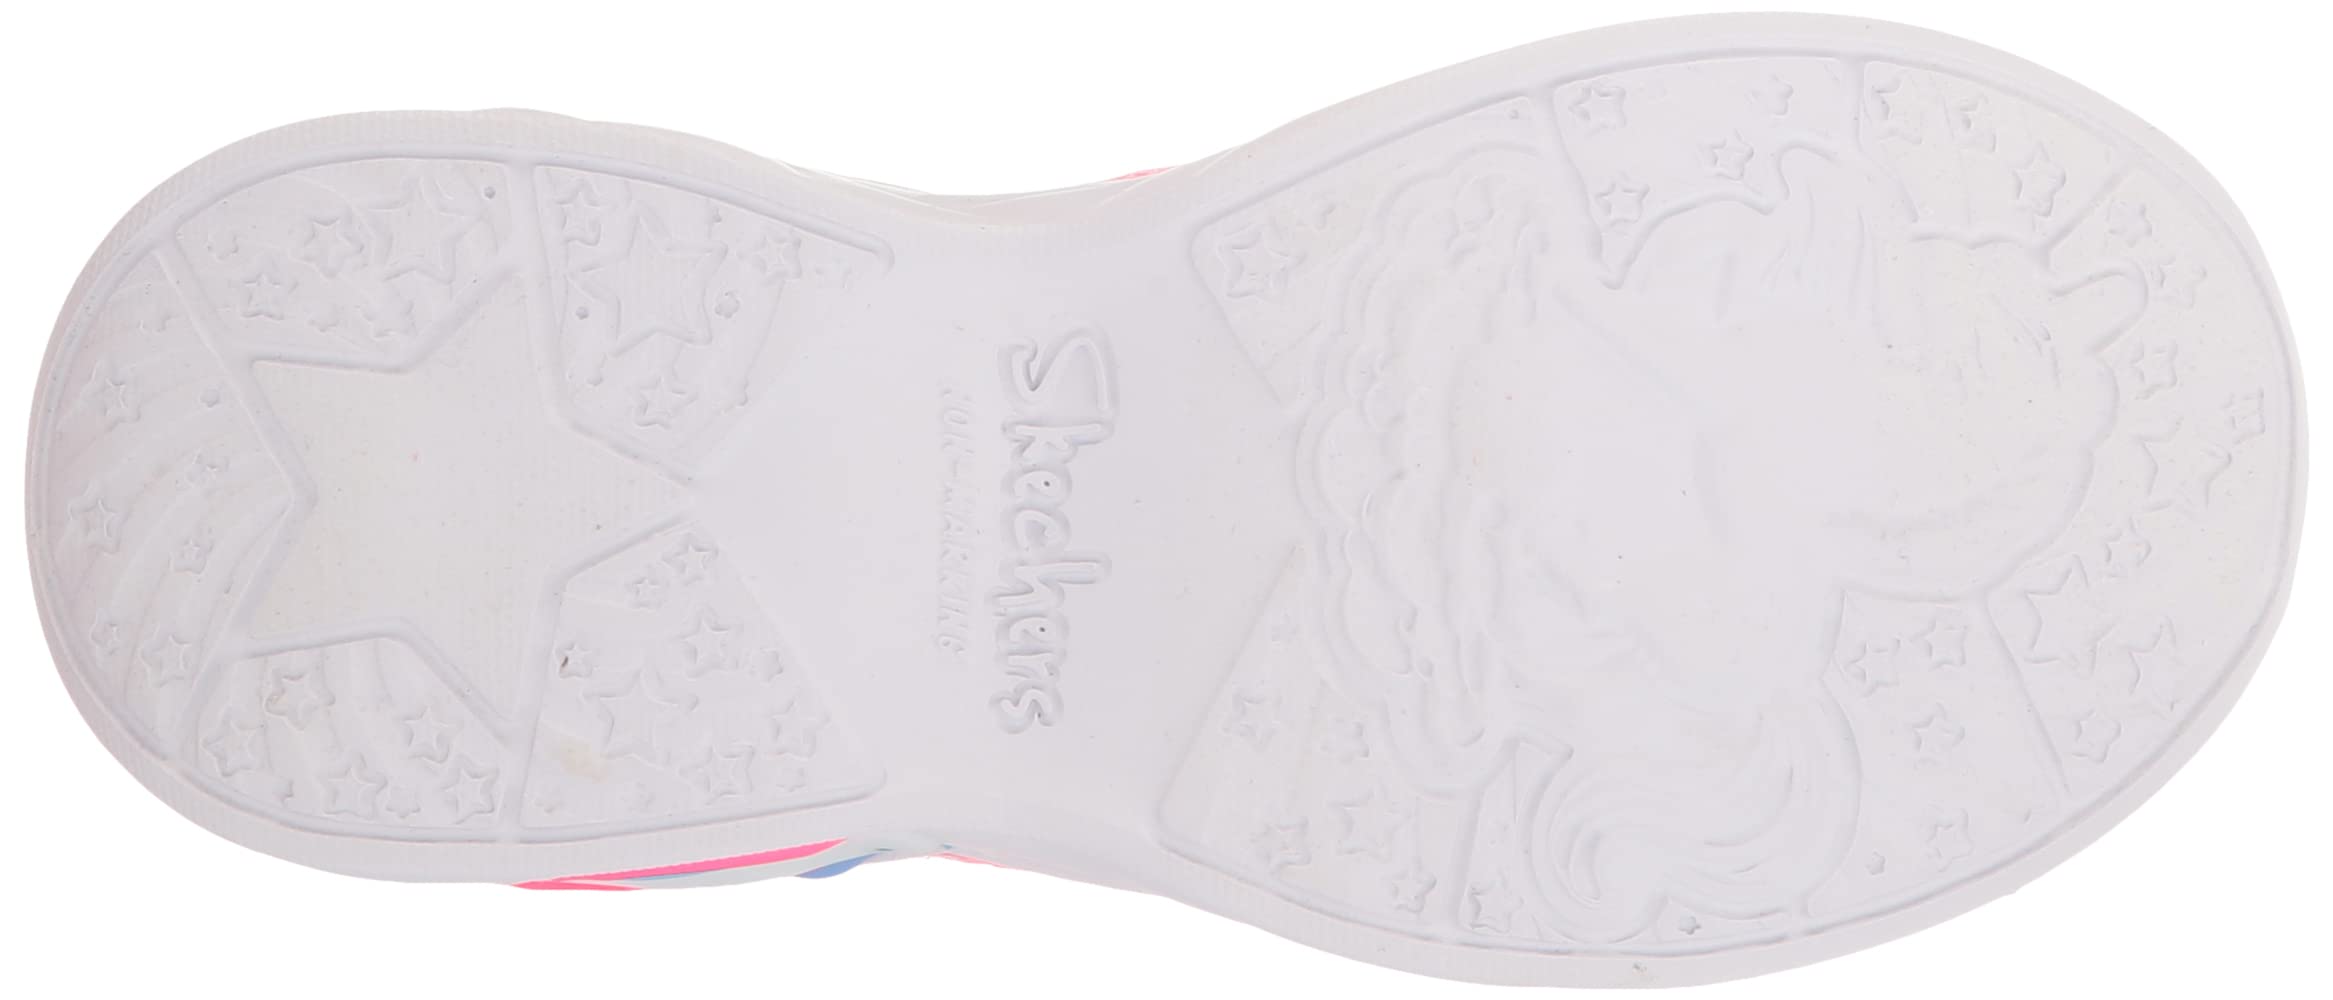 Skechers Unisex-Child Unicorn Dreams-Sherbert Sta Sneaker